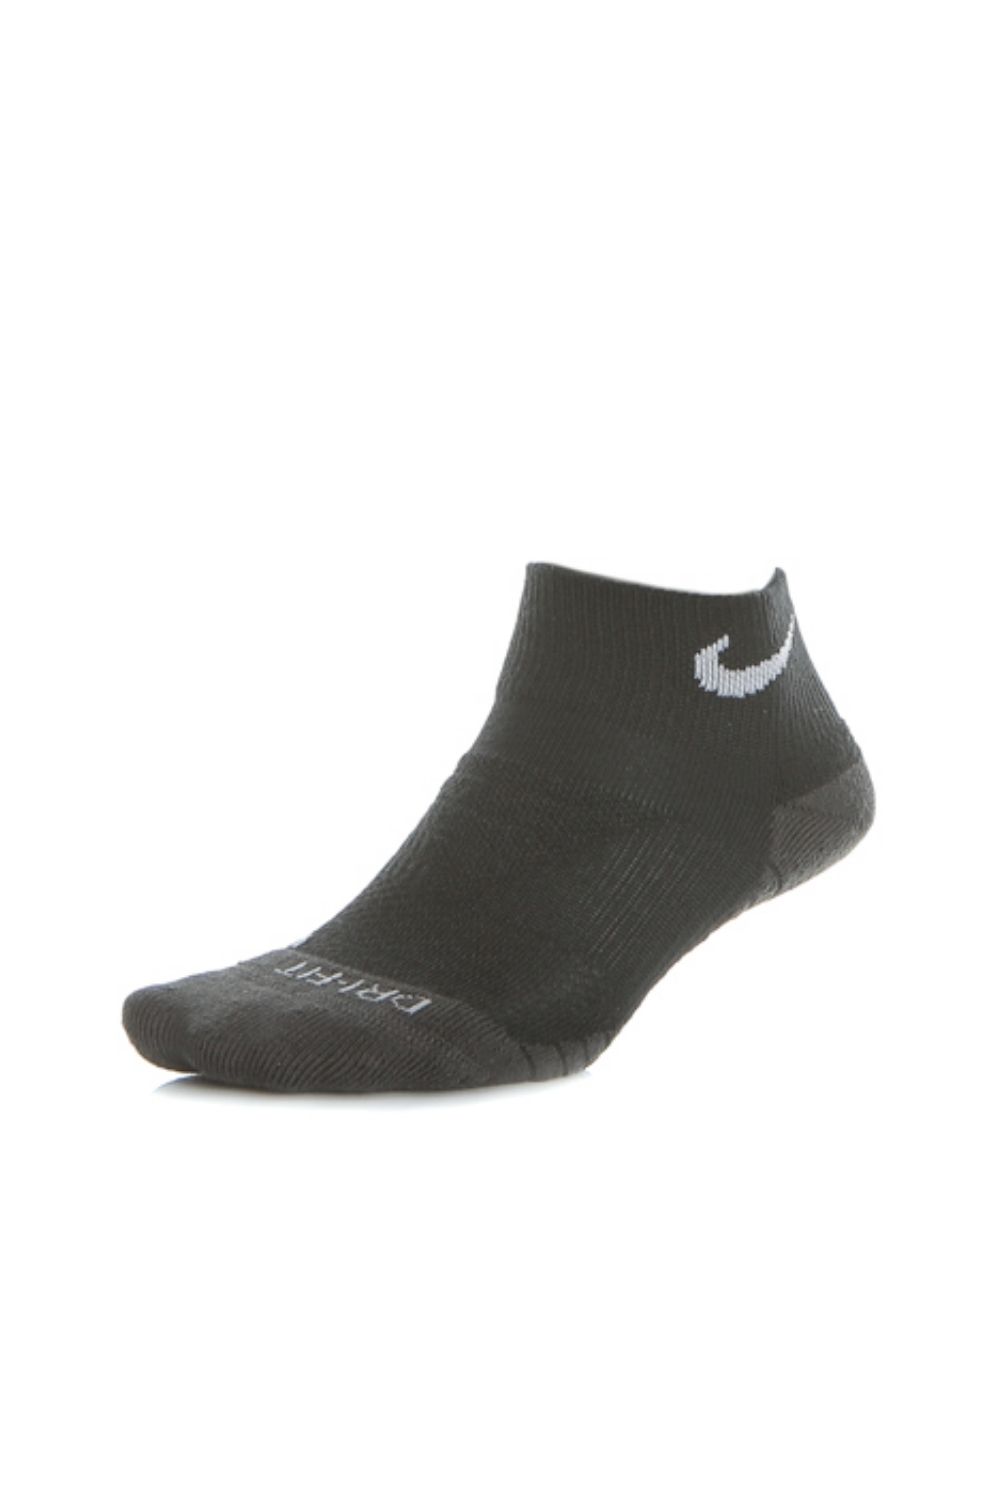 NIKE - Unisex κάλτσες NIKE EVRY MAX CUSH μαύρες Γυναικεία/Αξεσουάρ/Κάλτσες